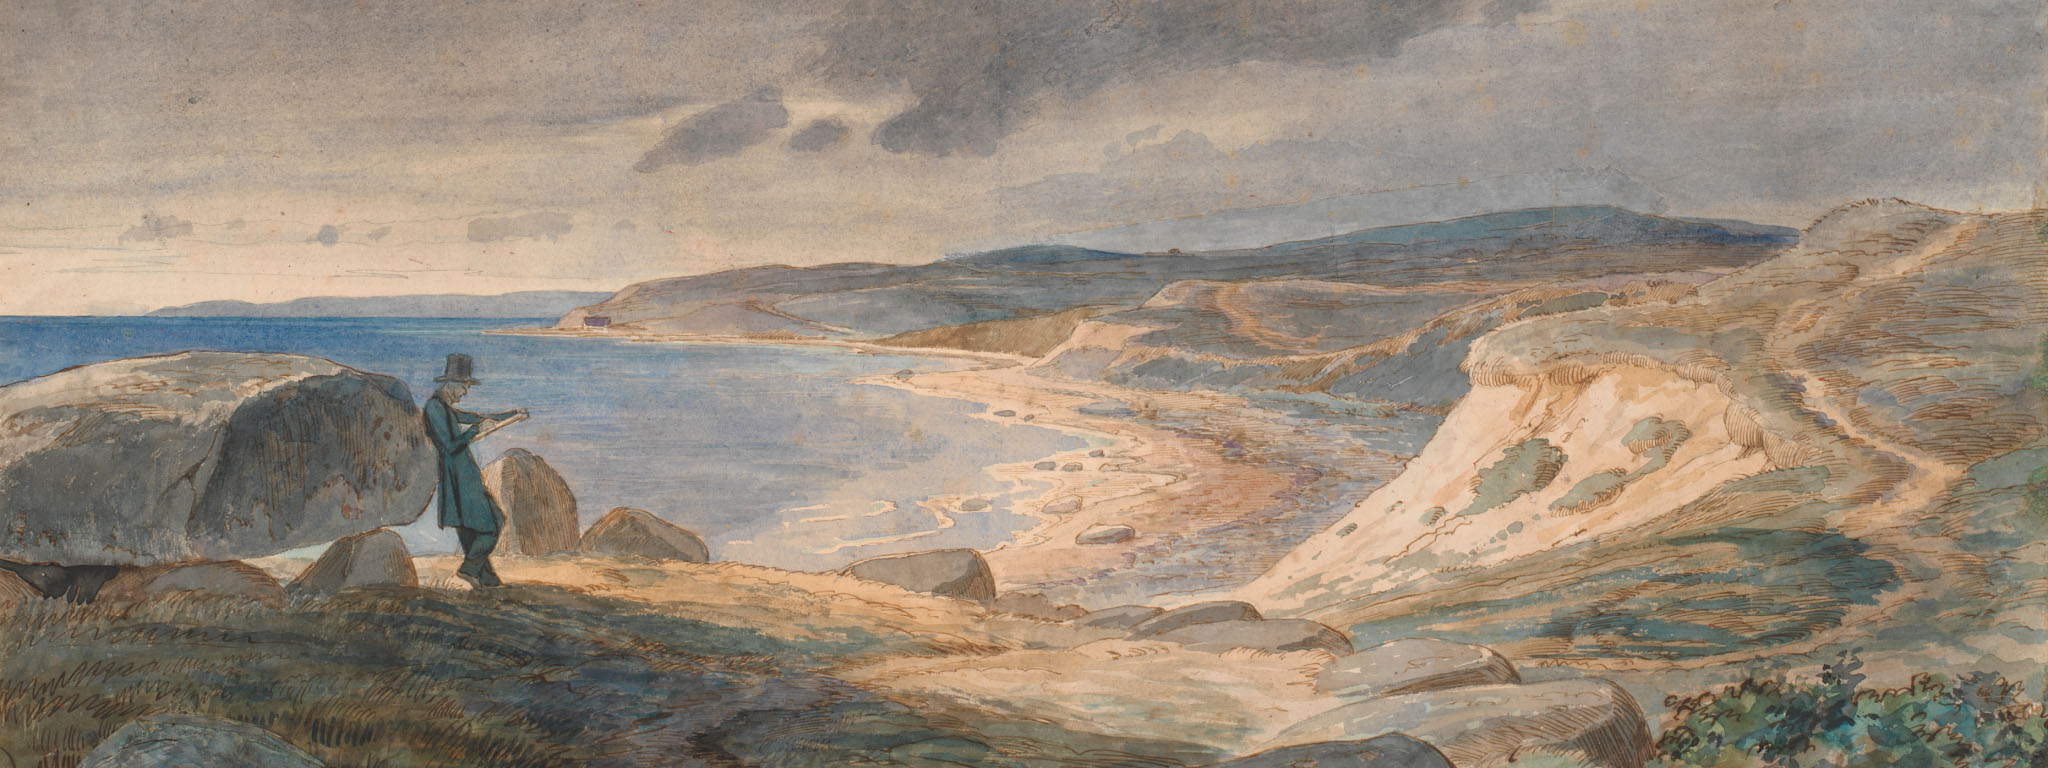 Refsnæs, Coastscape (detail), 1844, Johan Thomas Lundbye. Pen and brown and gray ink, brush and watercolor. SMK-The National Gallery of Denmark, Copenhagen. Image: SMK Photo/Jakob Skou-Hansen